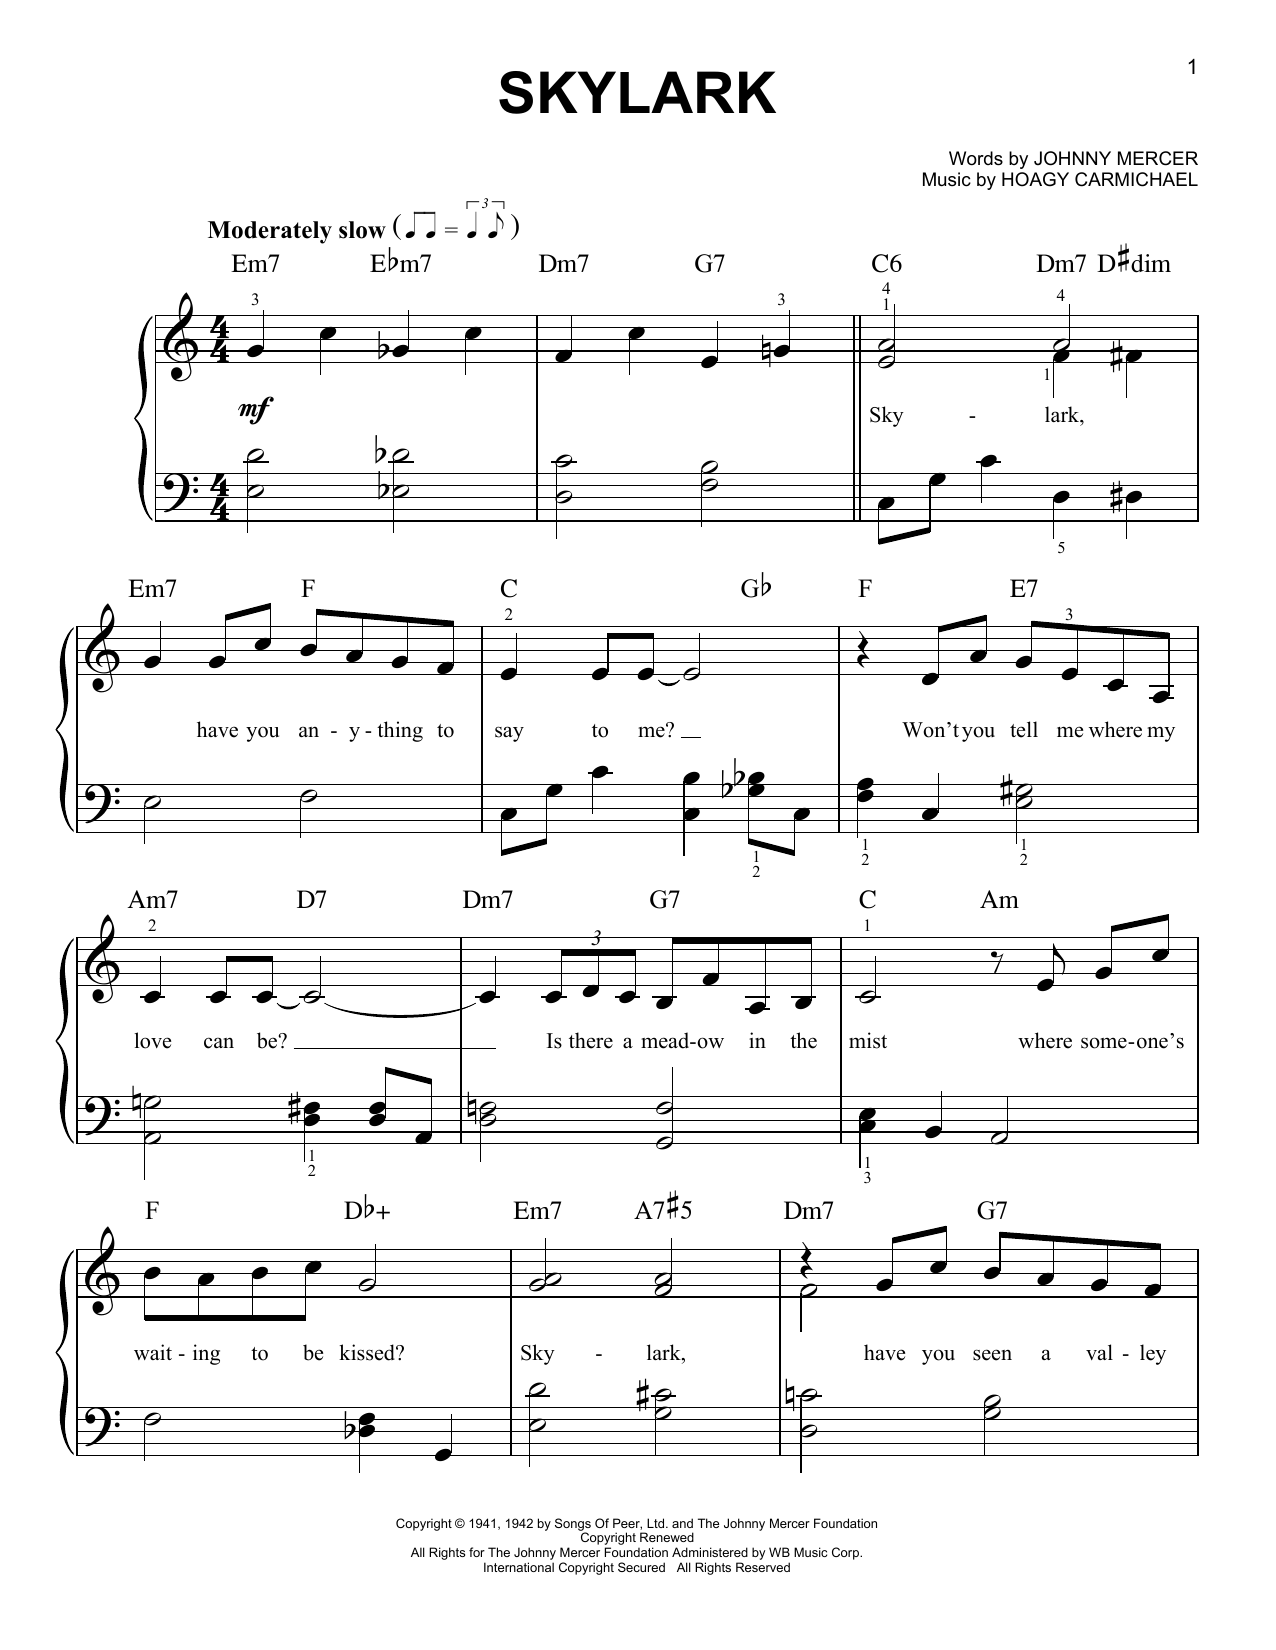 Hoagy Carmichael Skylark Sheet Music Notes & Chords for Trumpet - Download or Print PDF